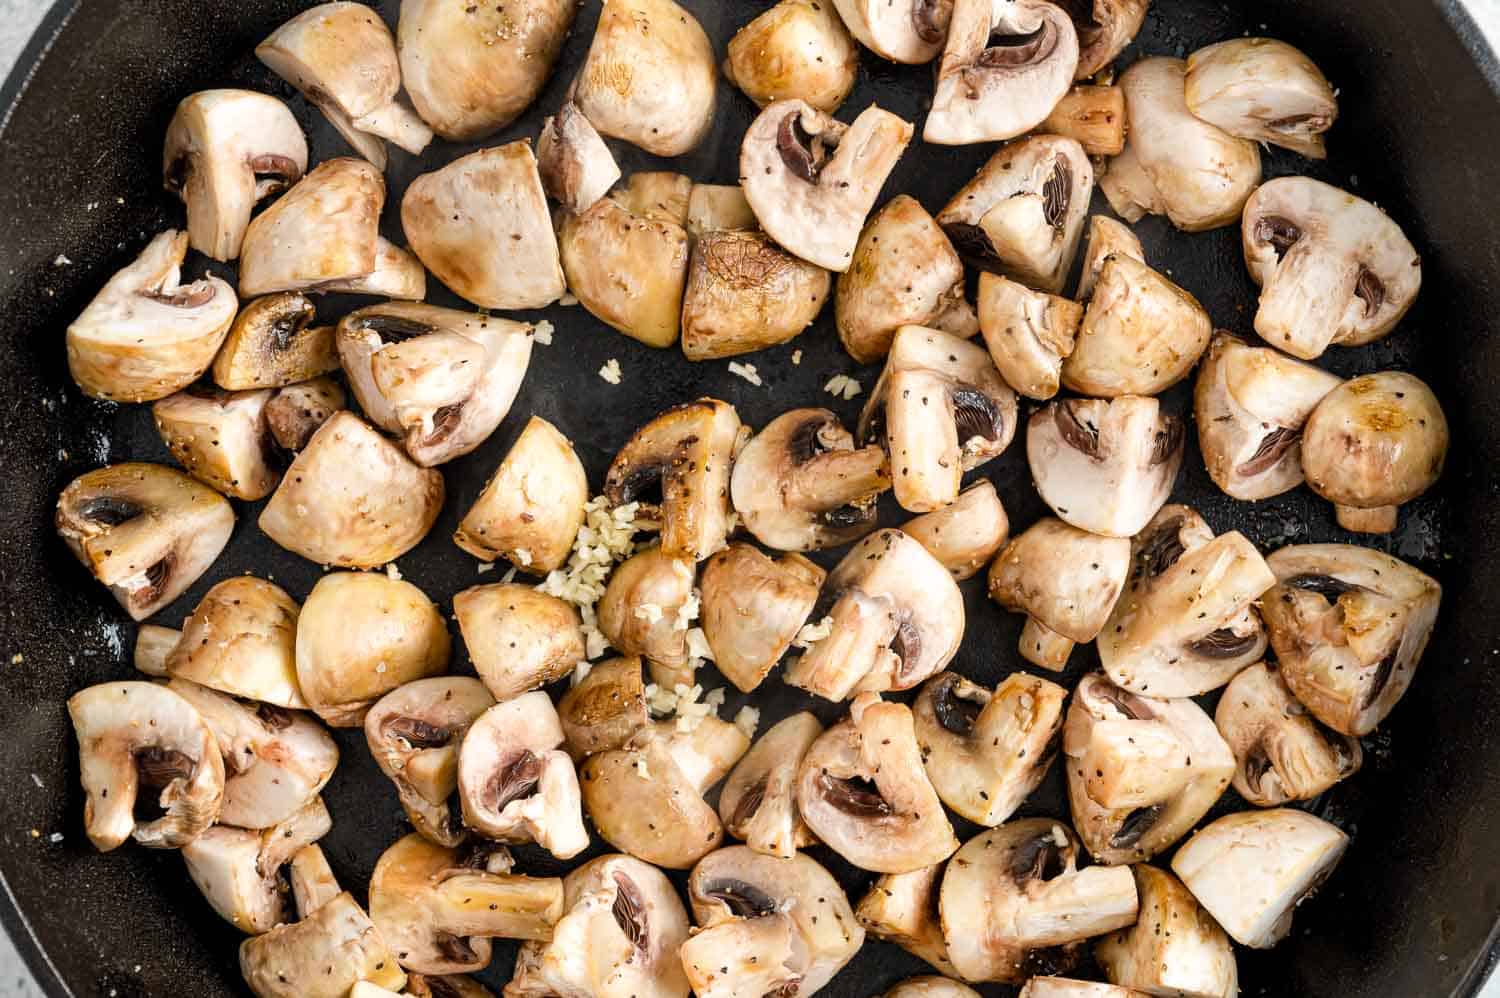 Garlic added to mushrooms.